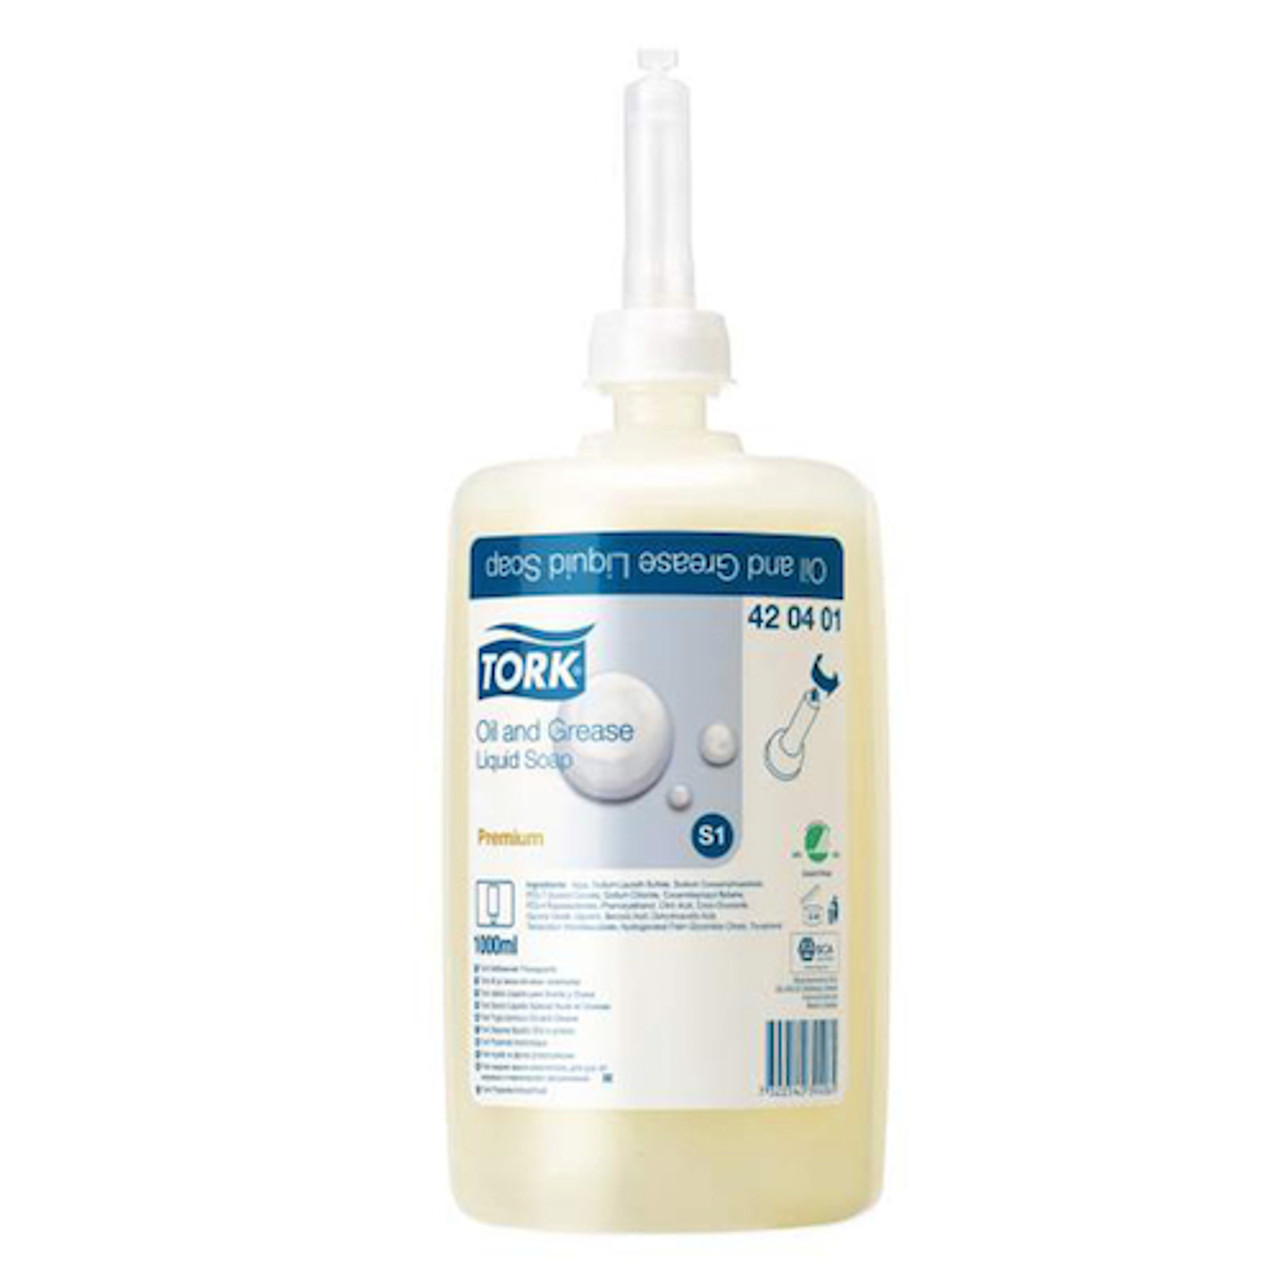 Tork Oil & Grease Liquid Soap S1 System 6 Cartridges x 1 L (420401)
Tork Products